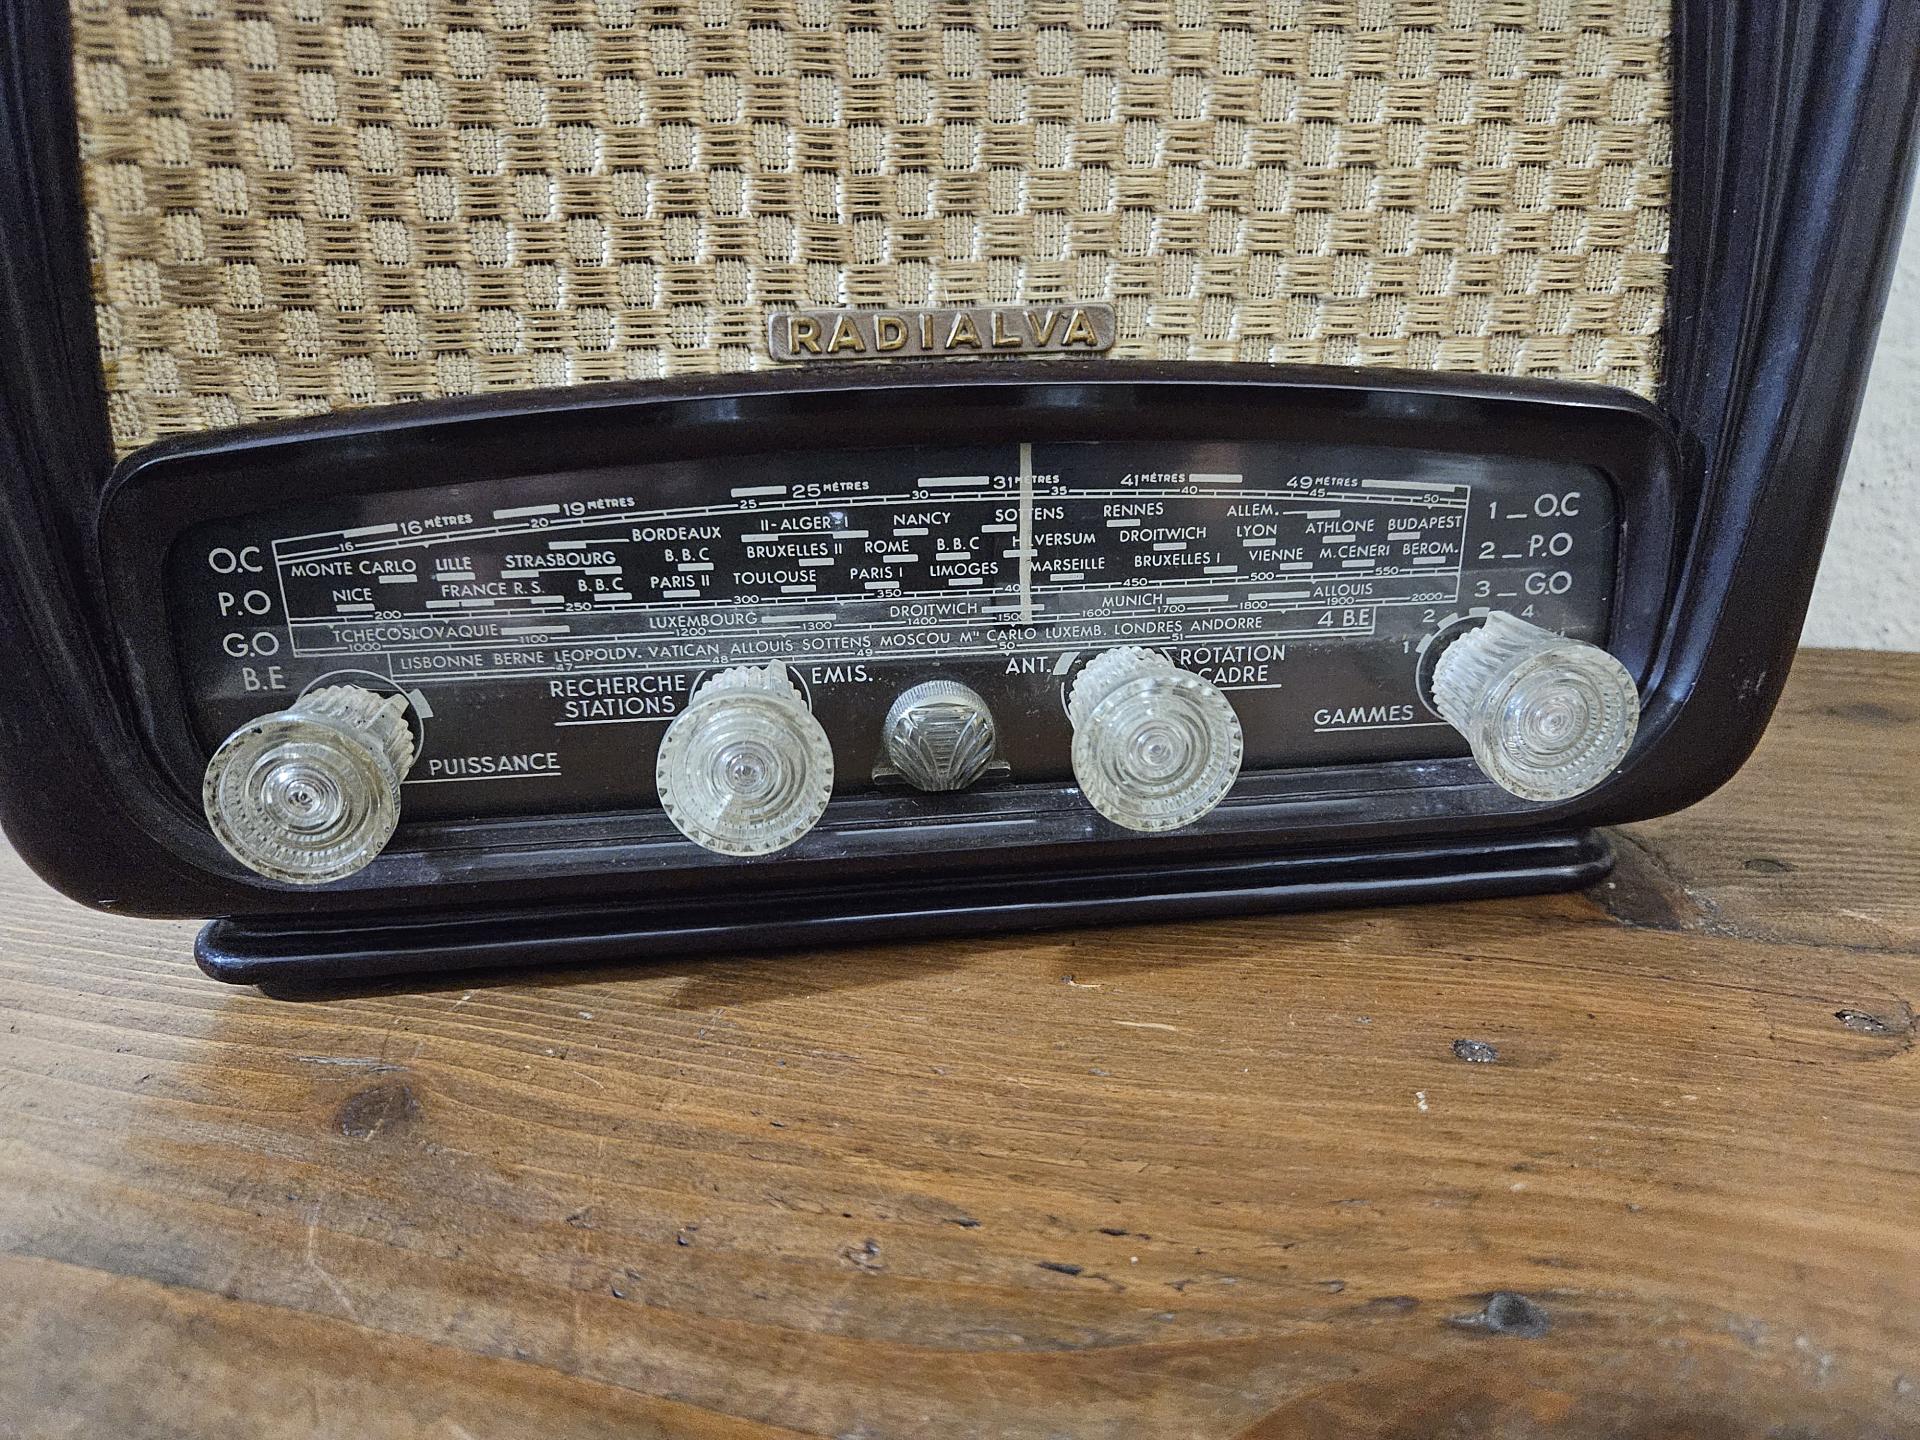 4 poste radio radialva